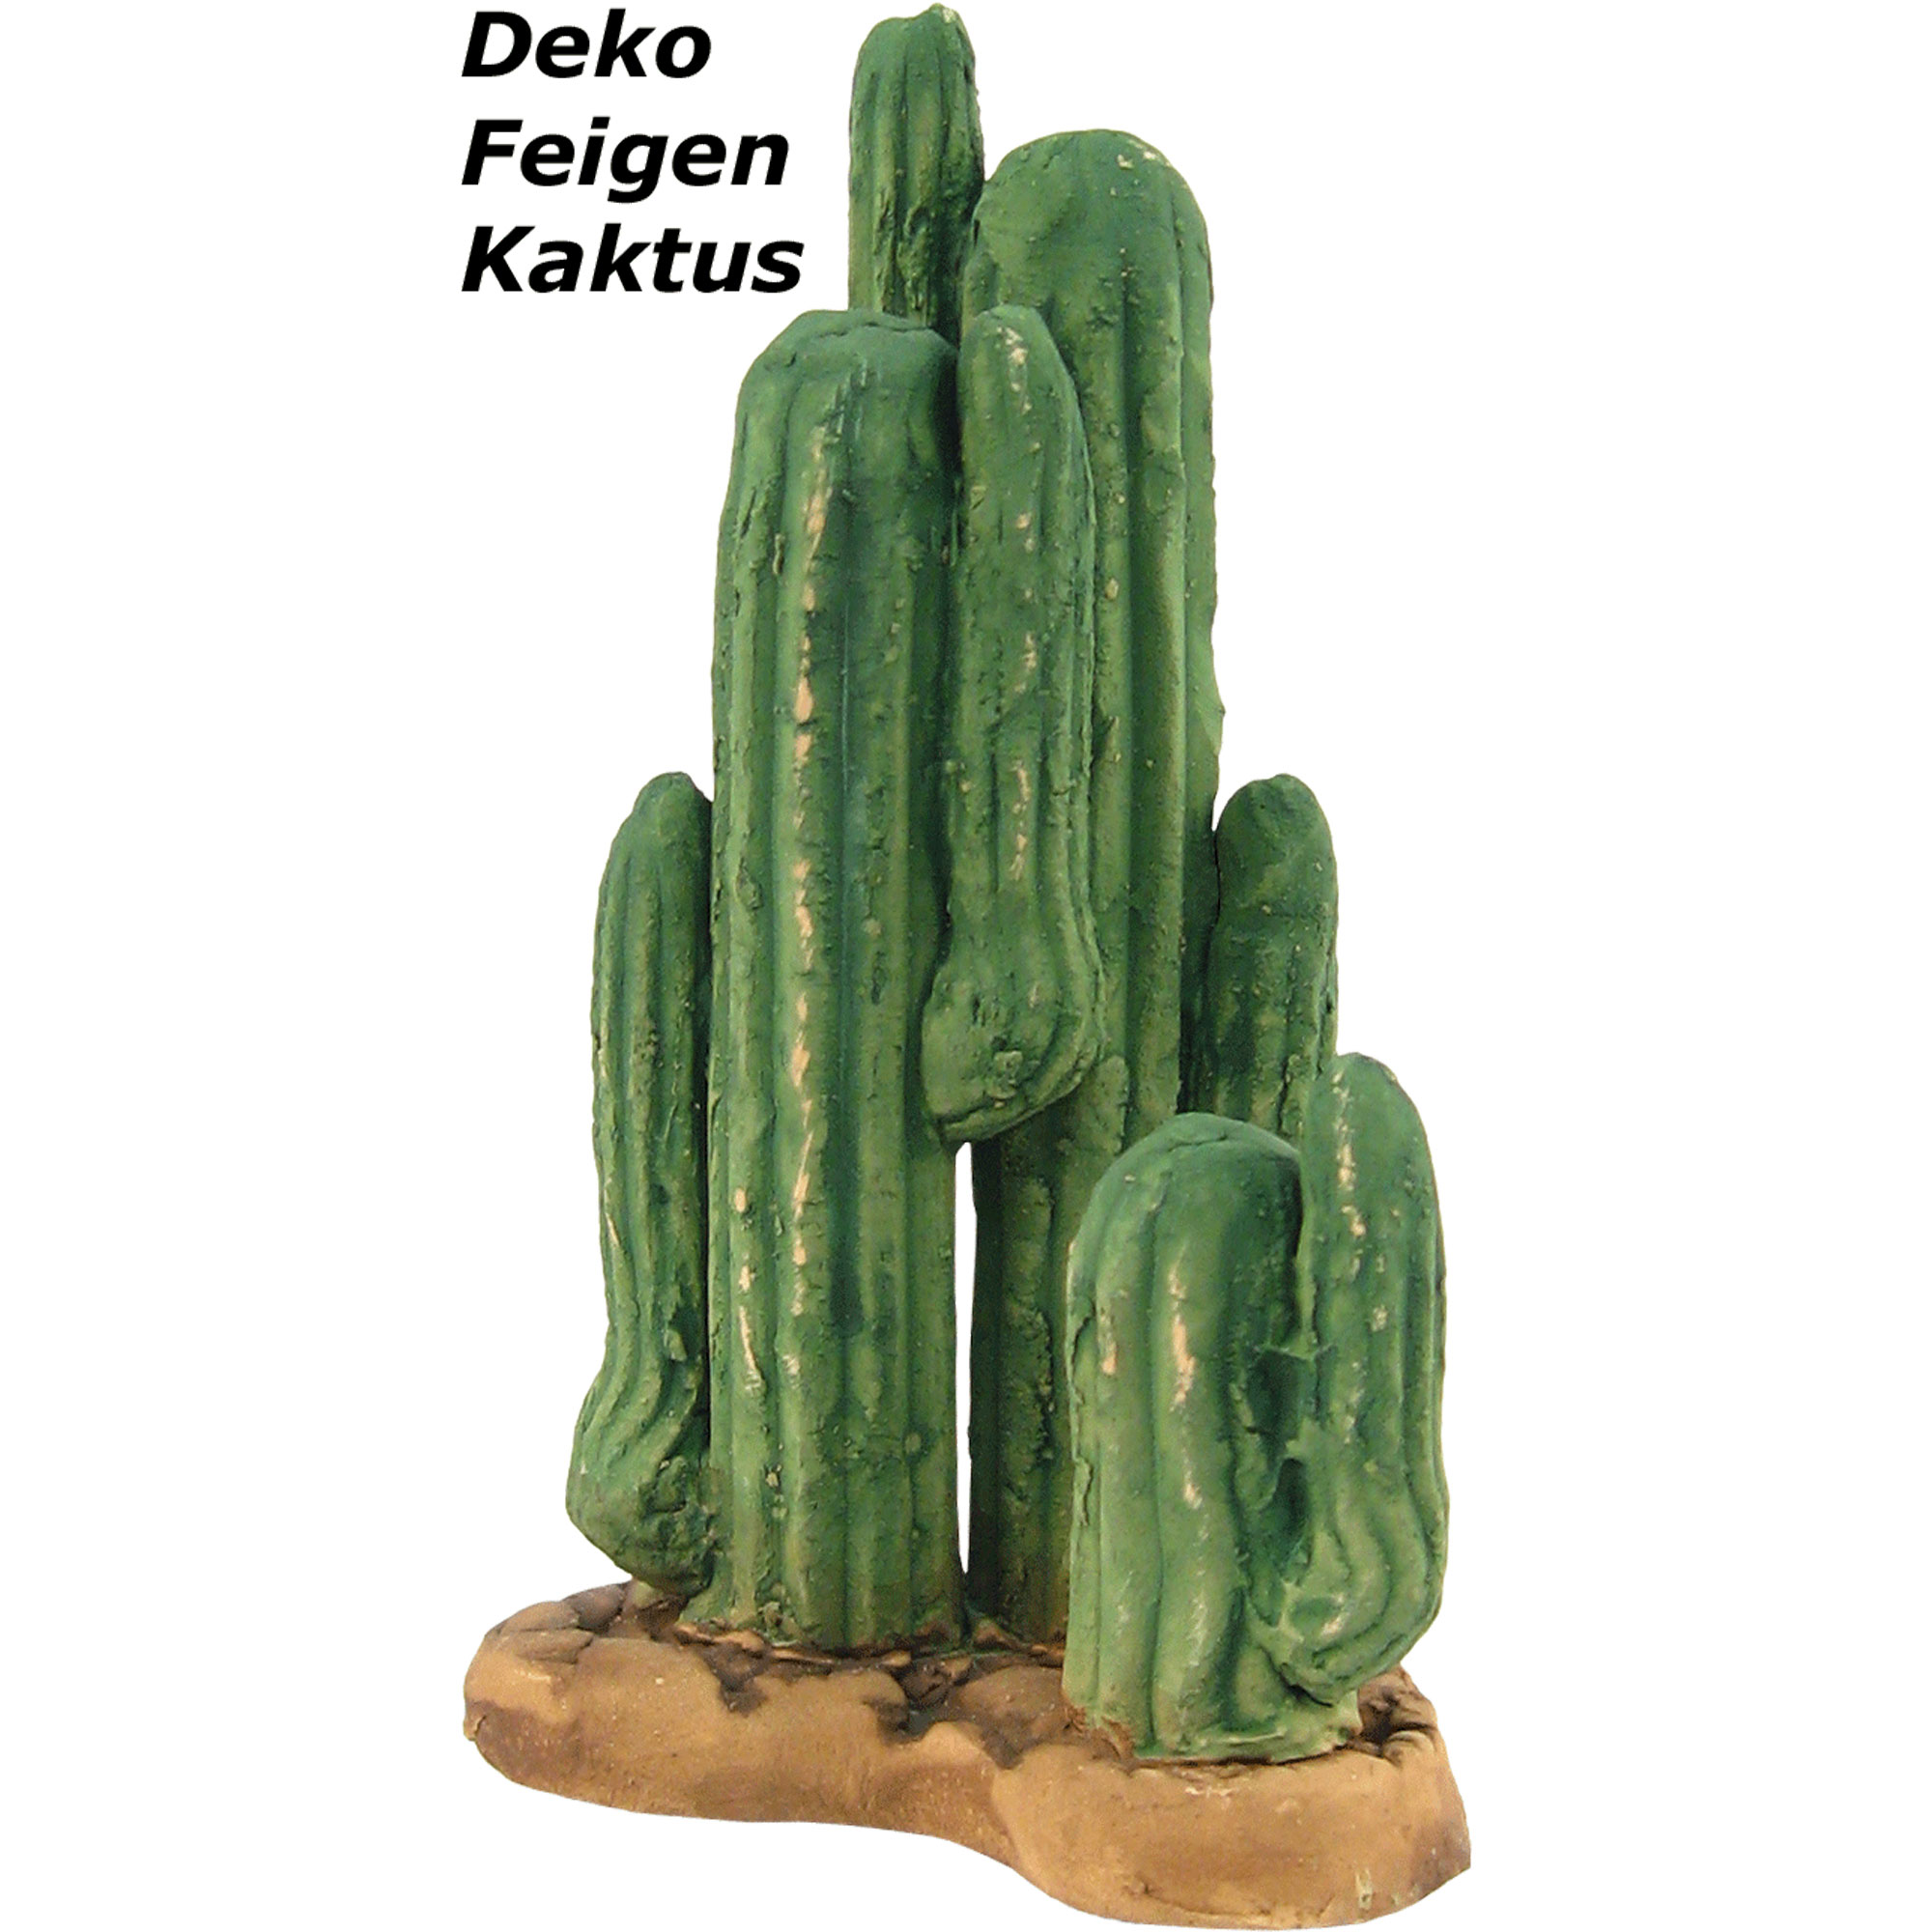 Feigen-Kaktus Dekoration